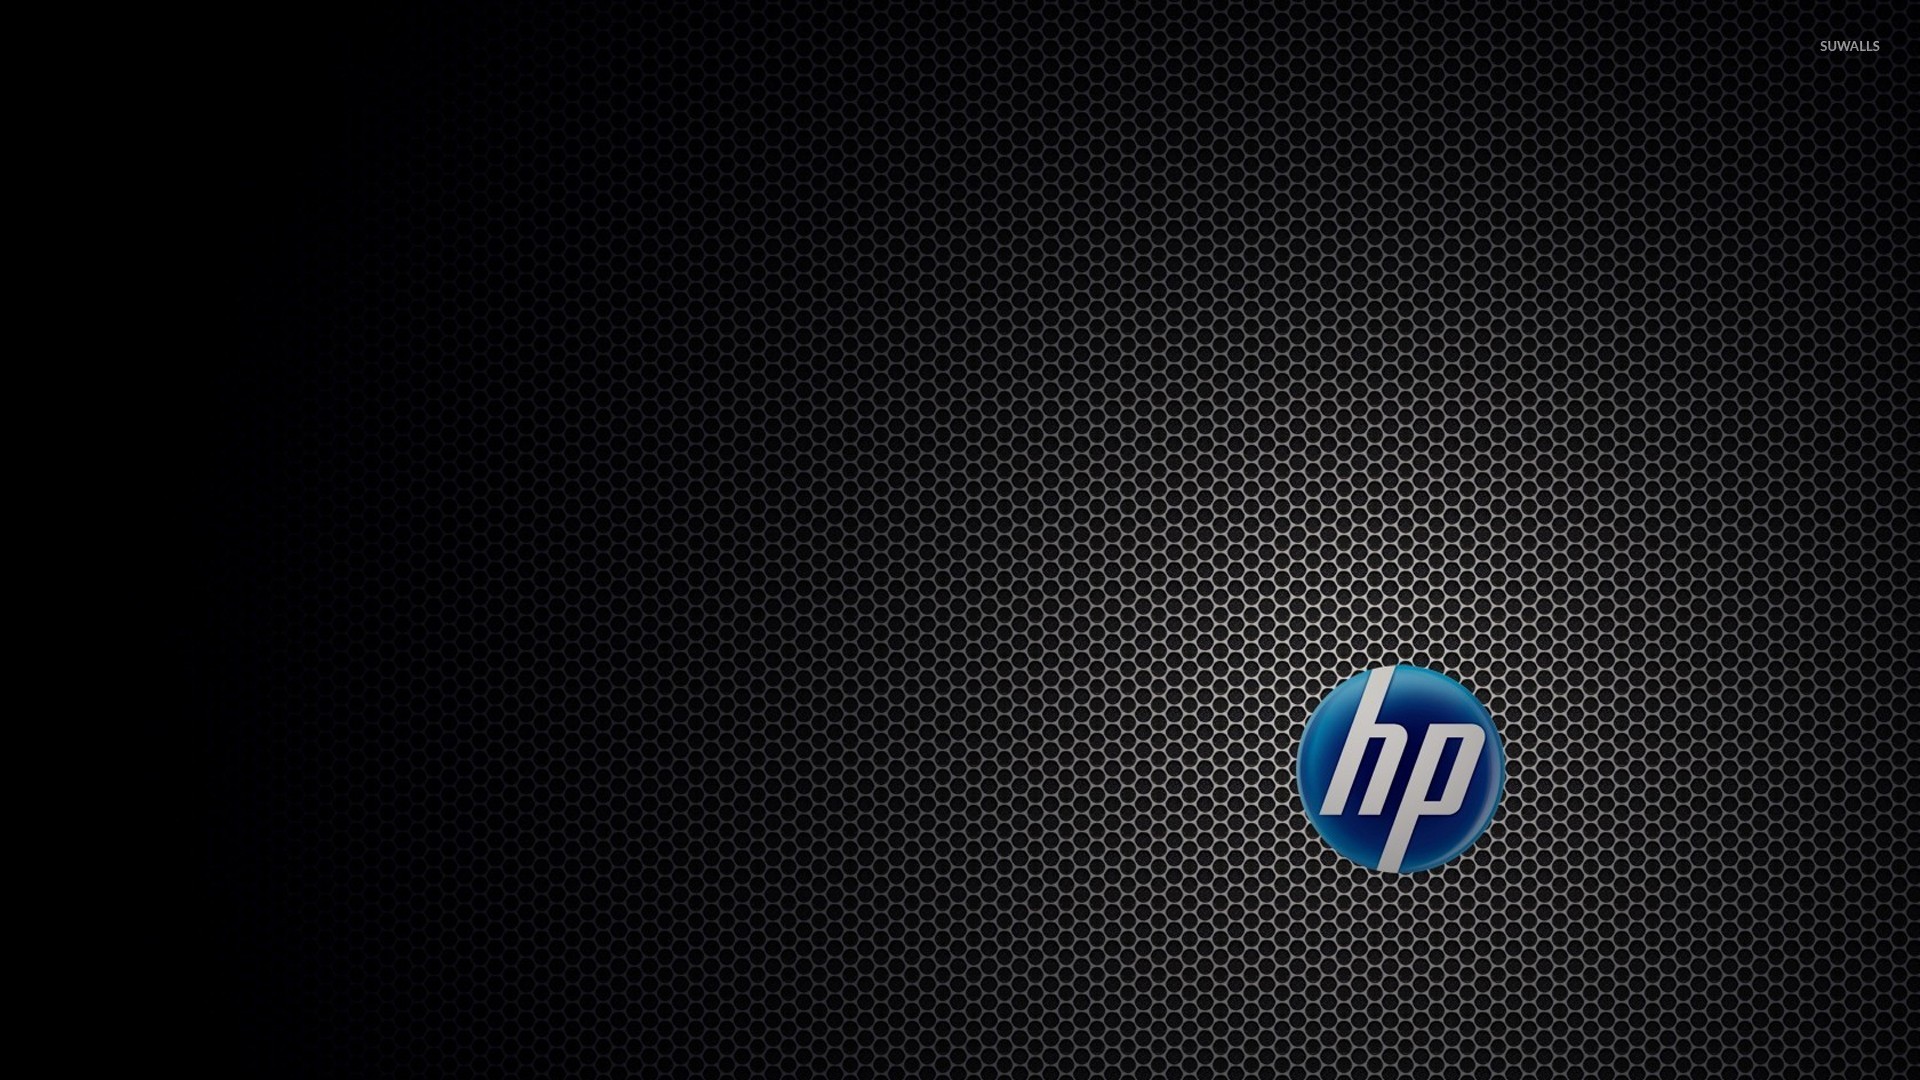 Hp logo [4] wallpaper - Computer wallpapers - #27750